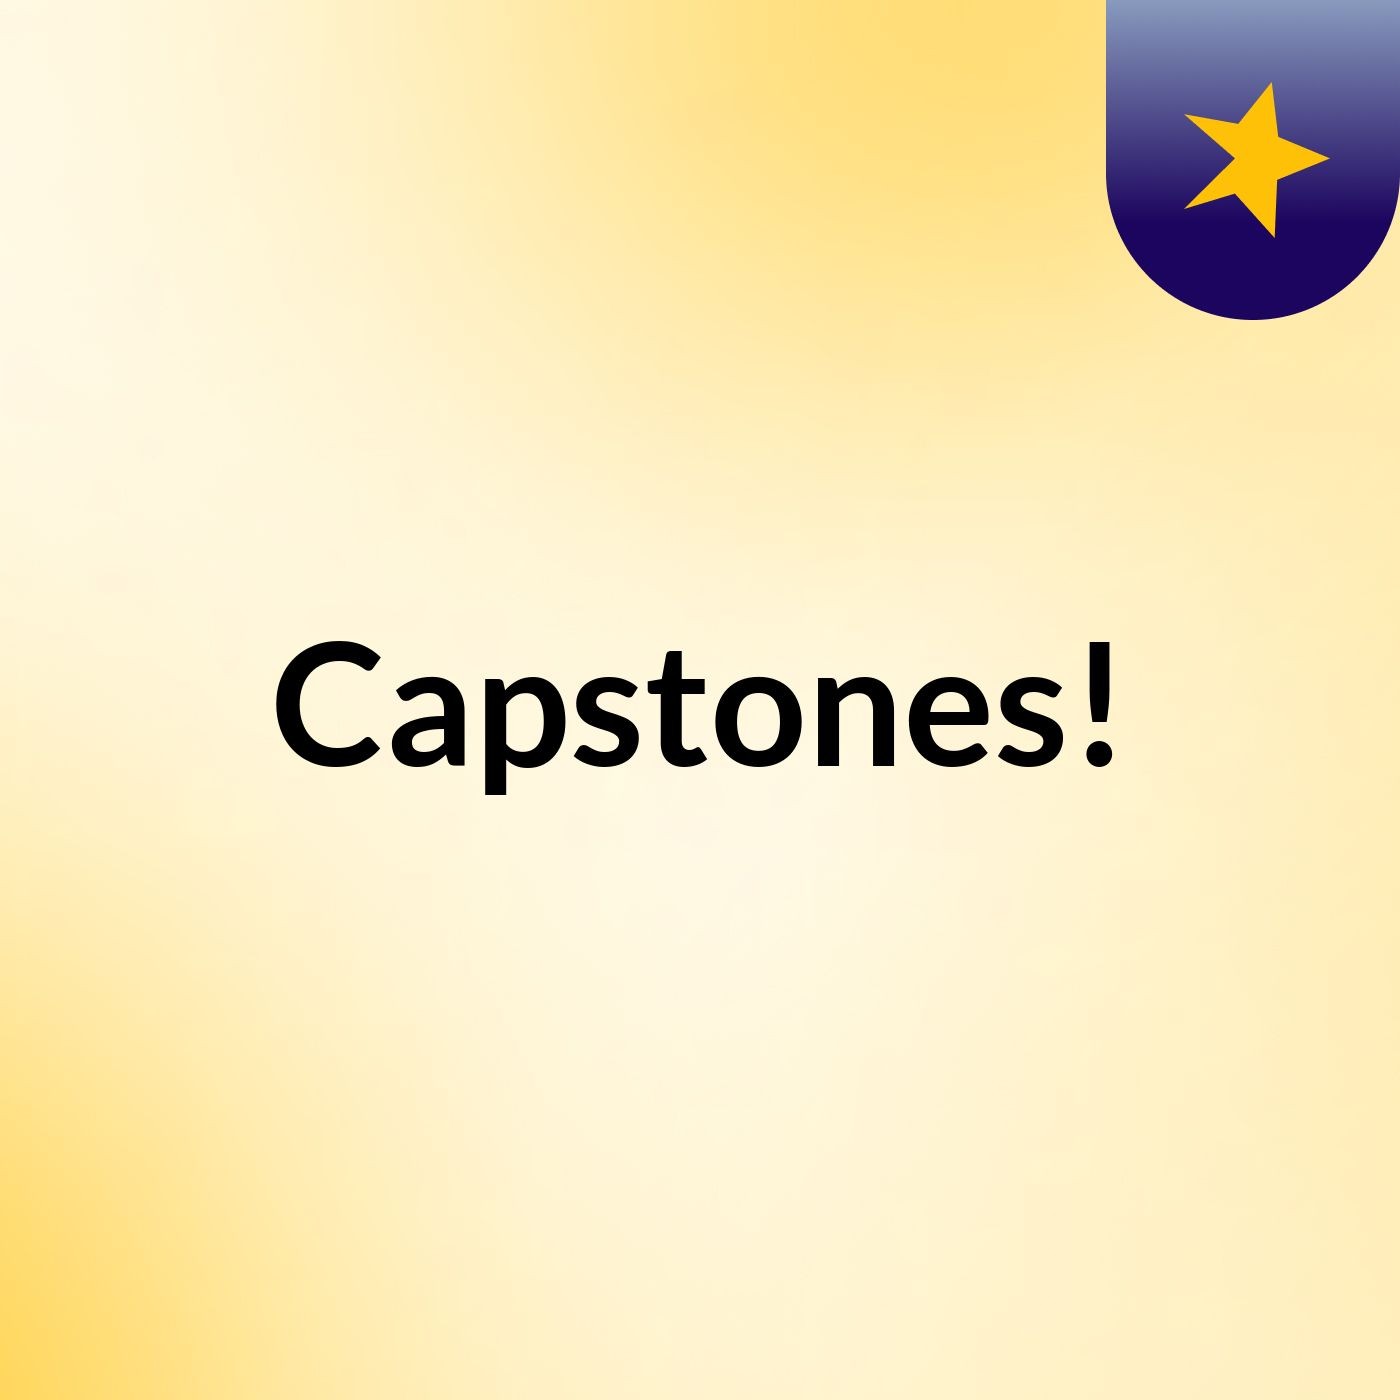 Capstones!